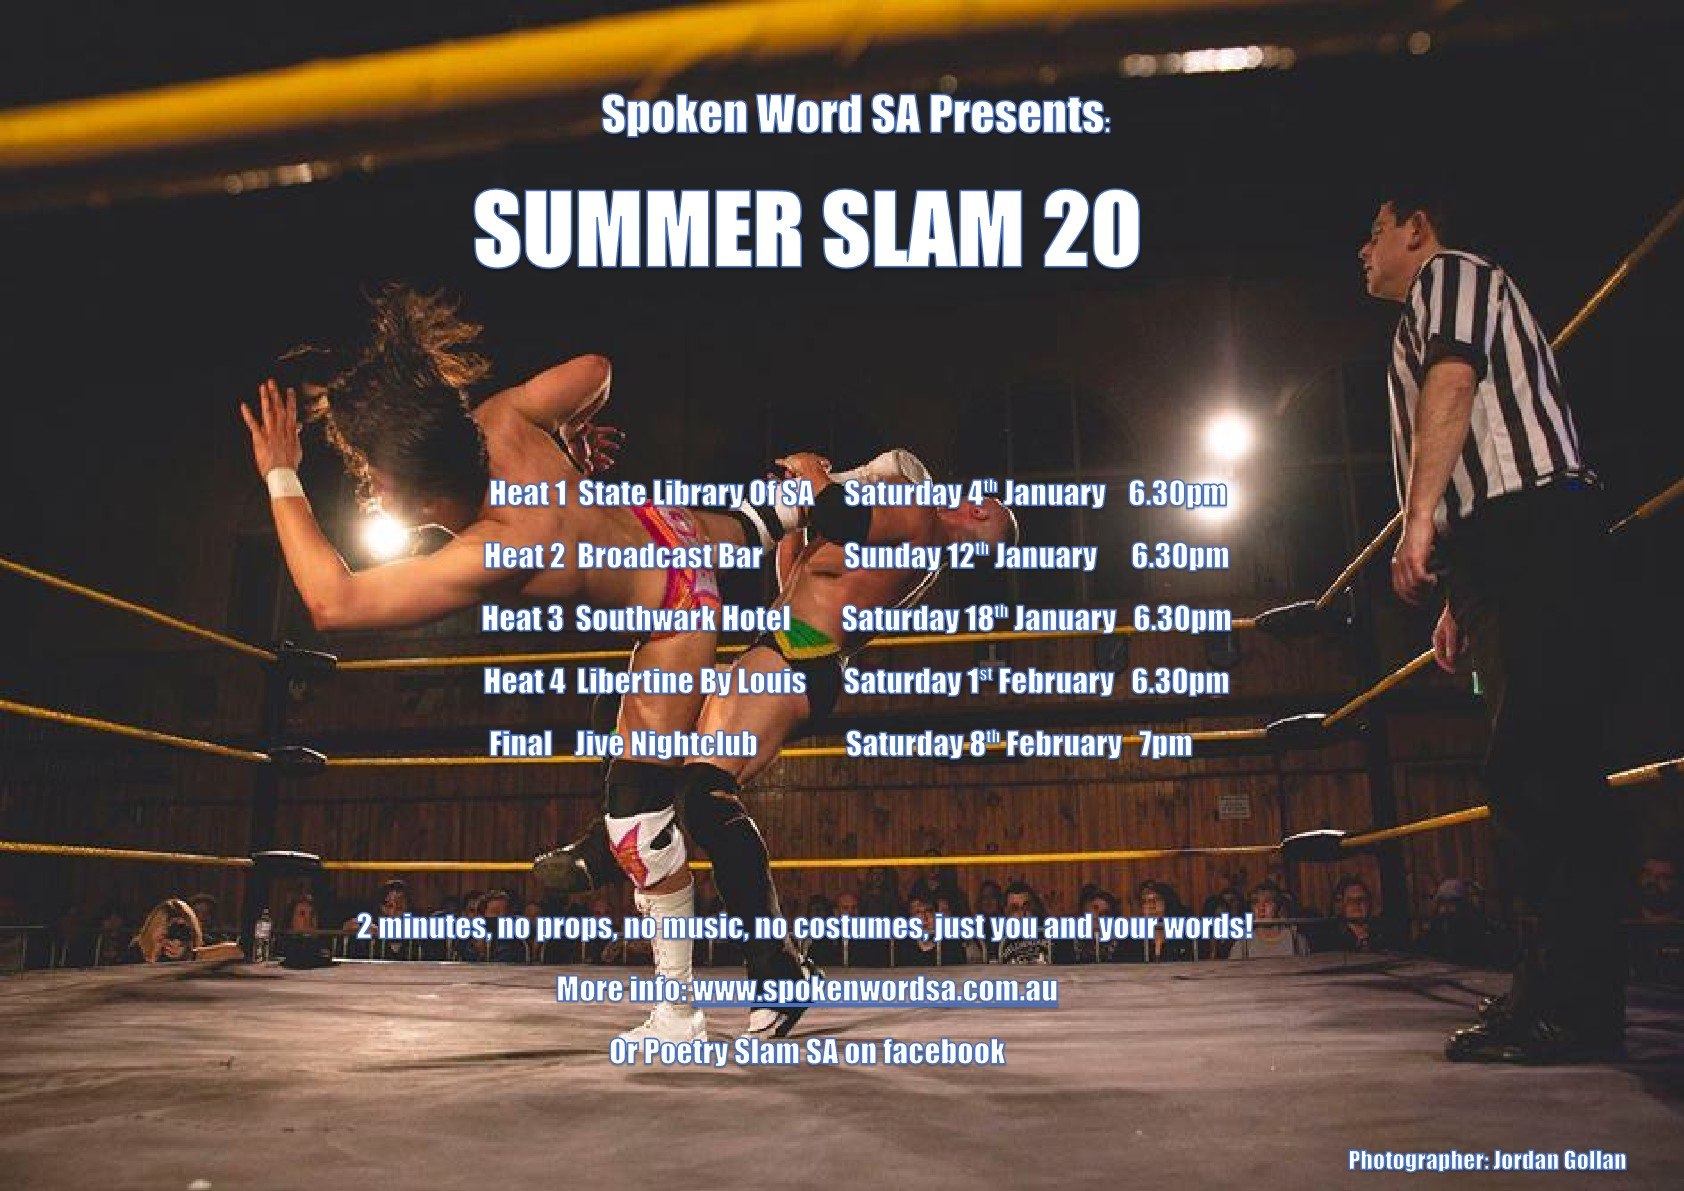 Summer Slam 20 details Spoken Word SA